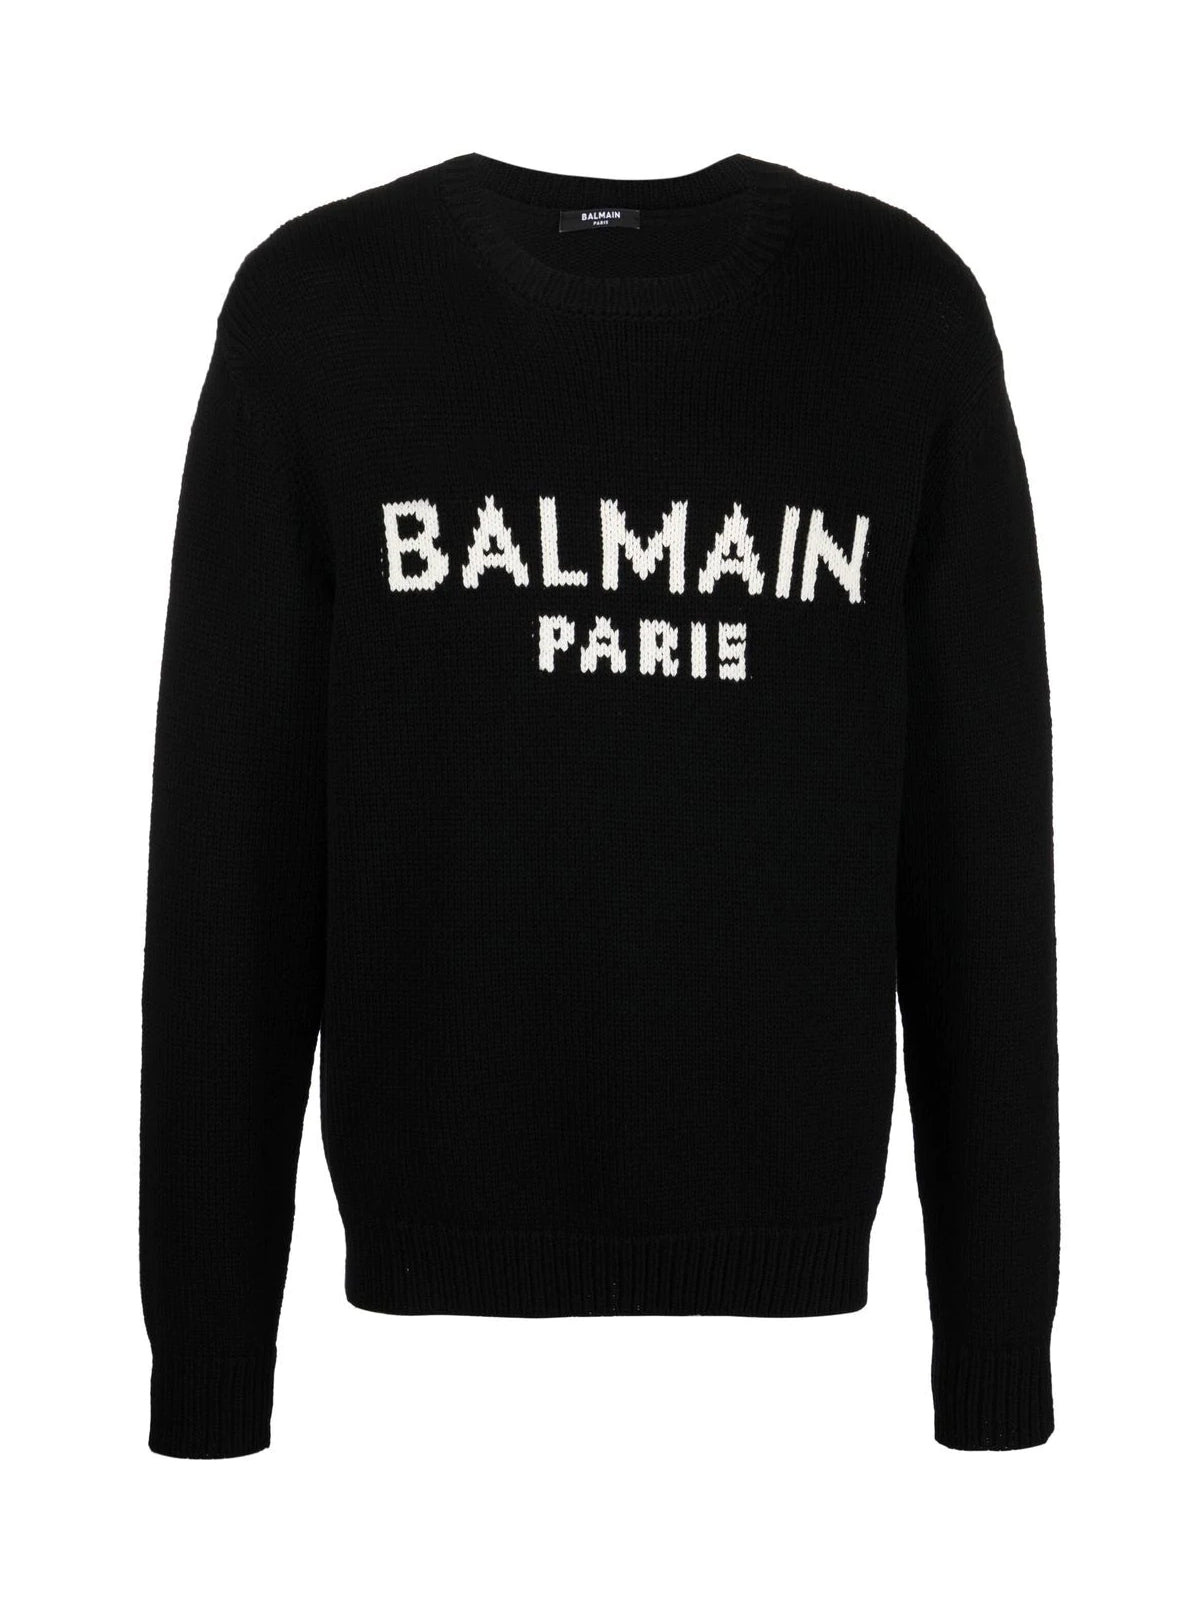 Balmain-OUTLET-SALE-Logo Intarsia Merino Wool Sweater-ARCHIVIST